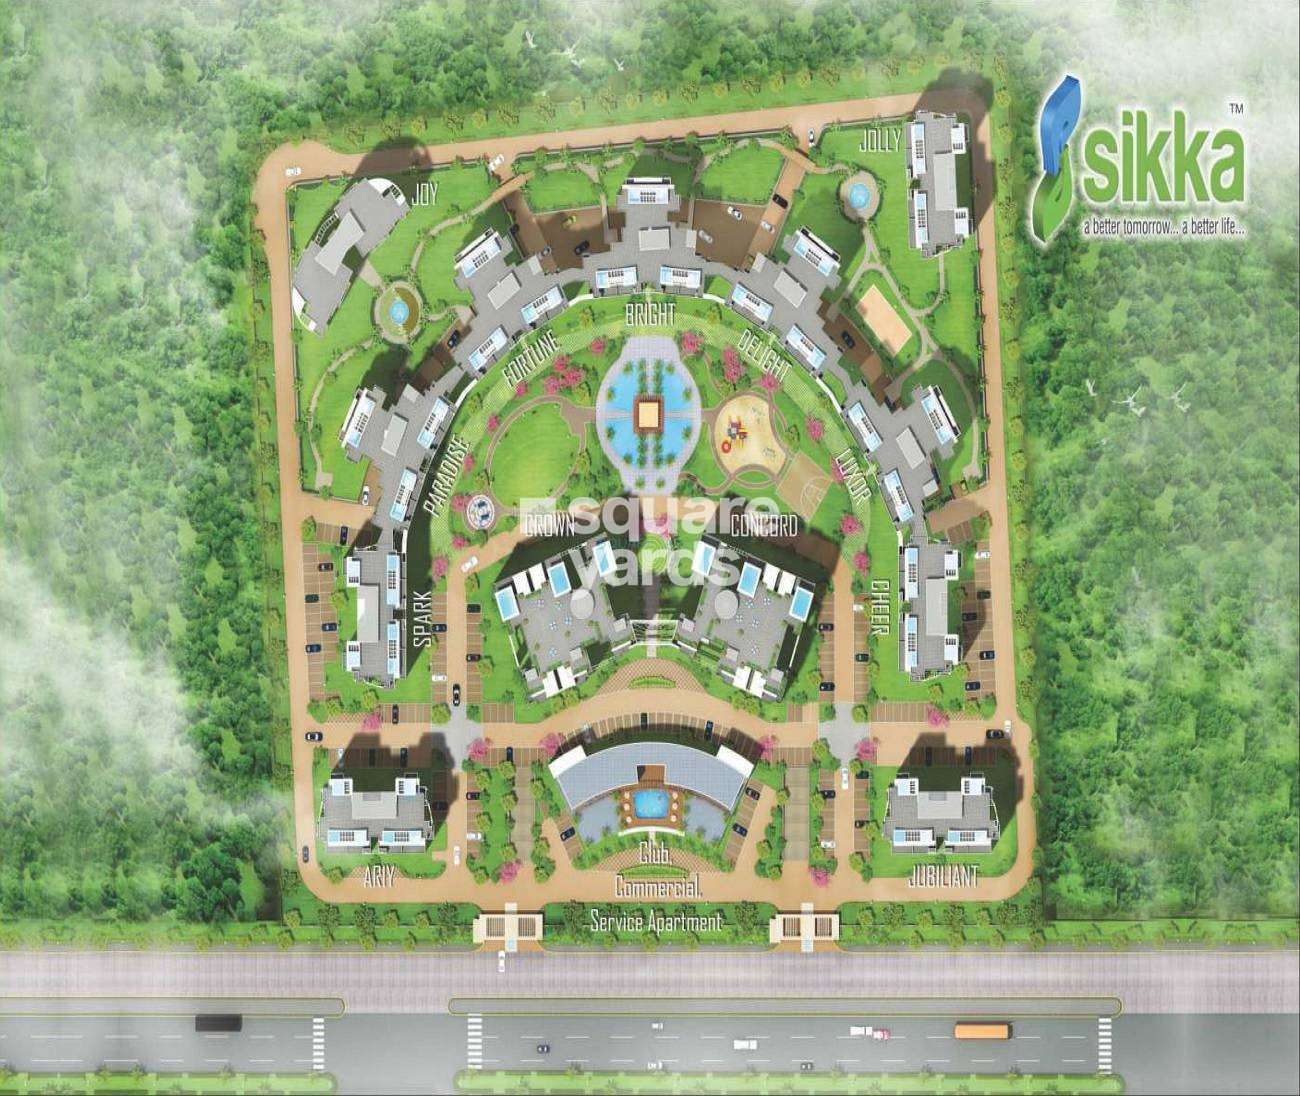 sikka kaamna greens project master plan image1